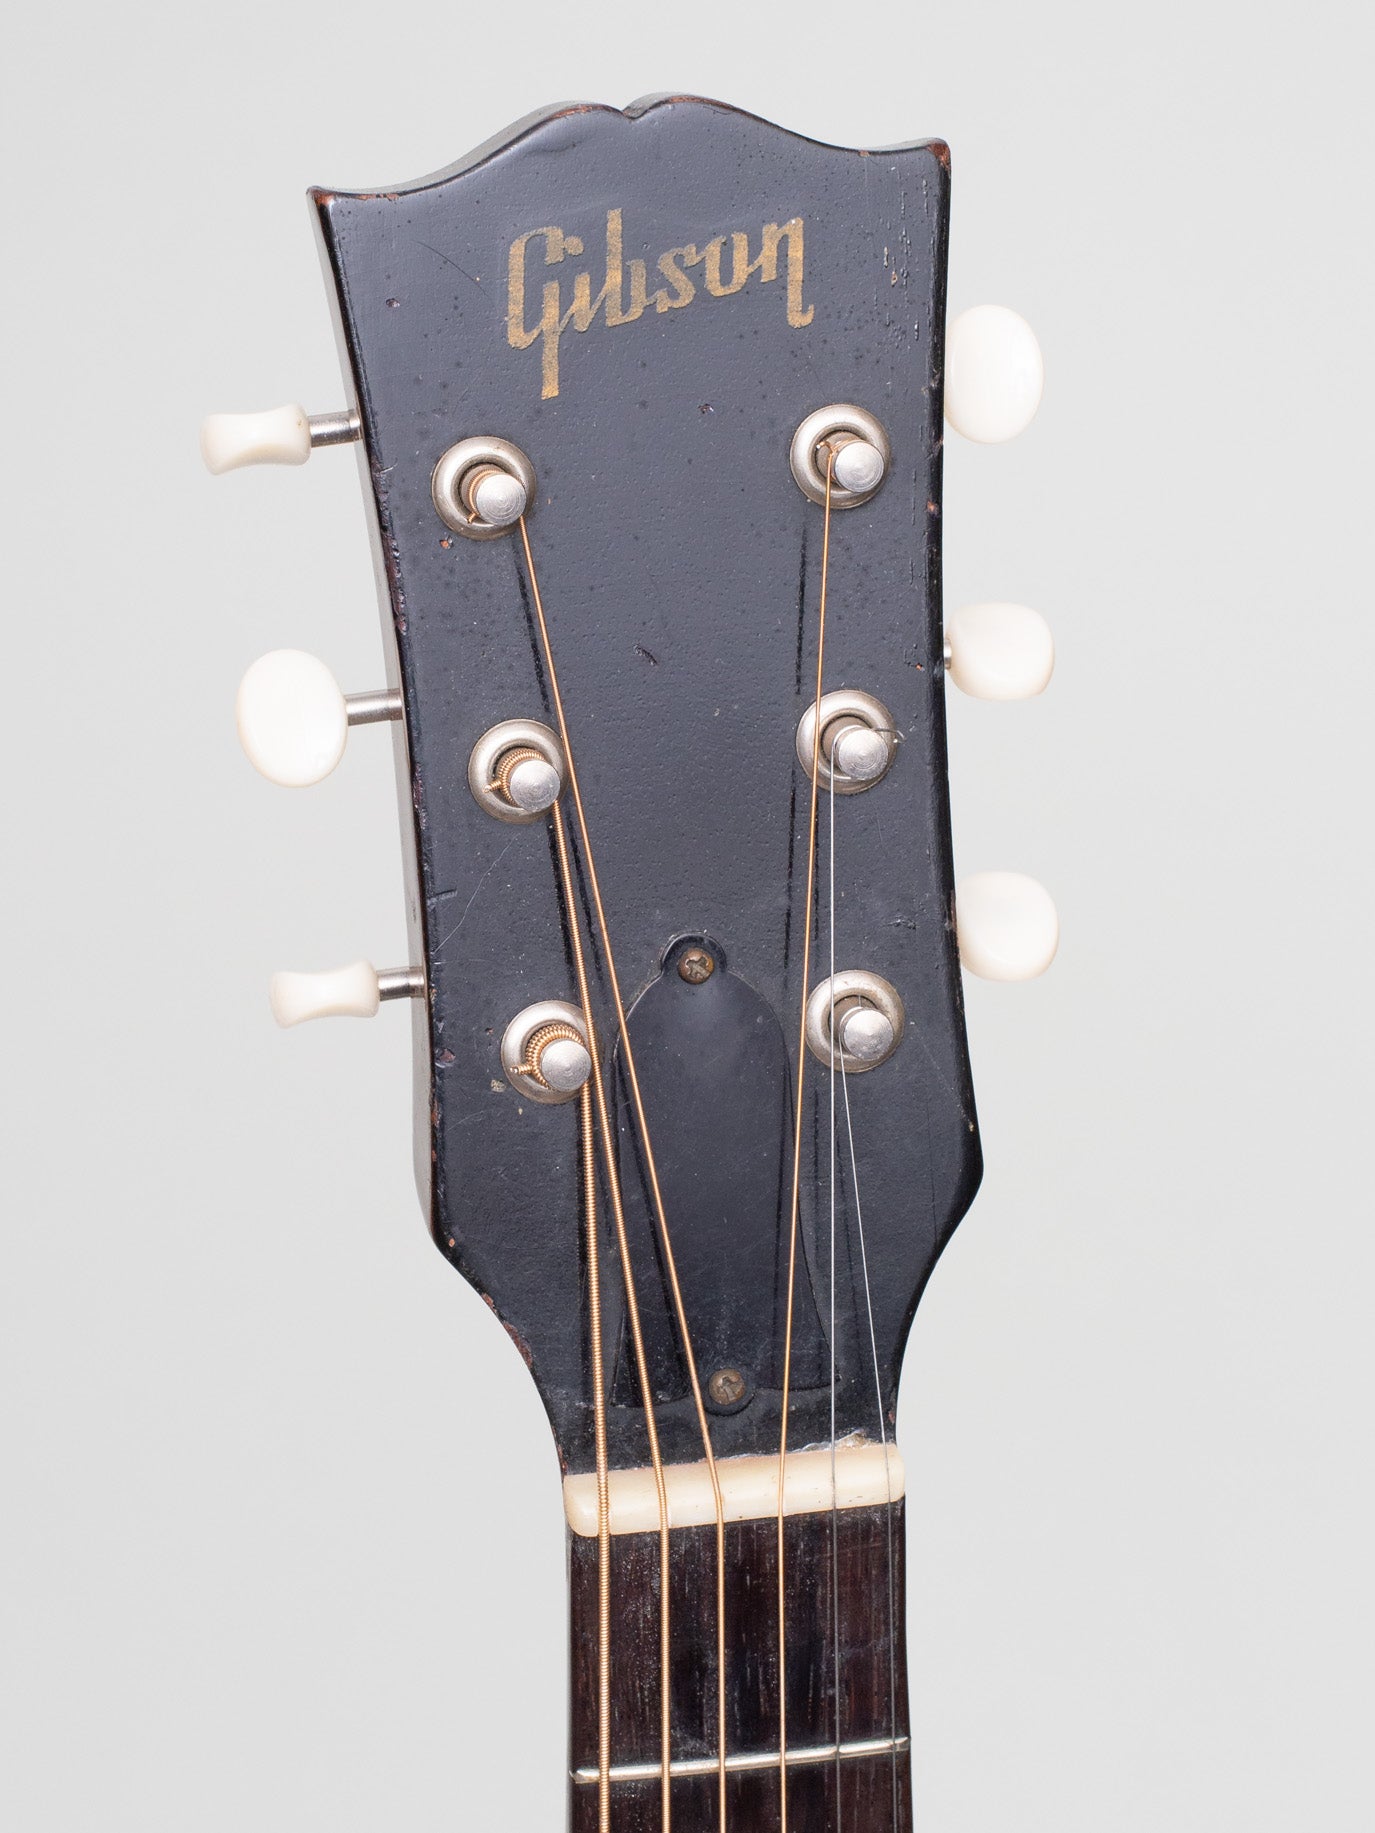 1950 Gibson J-45